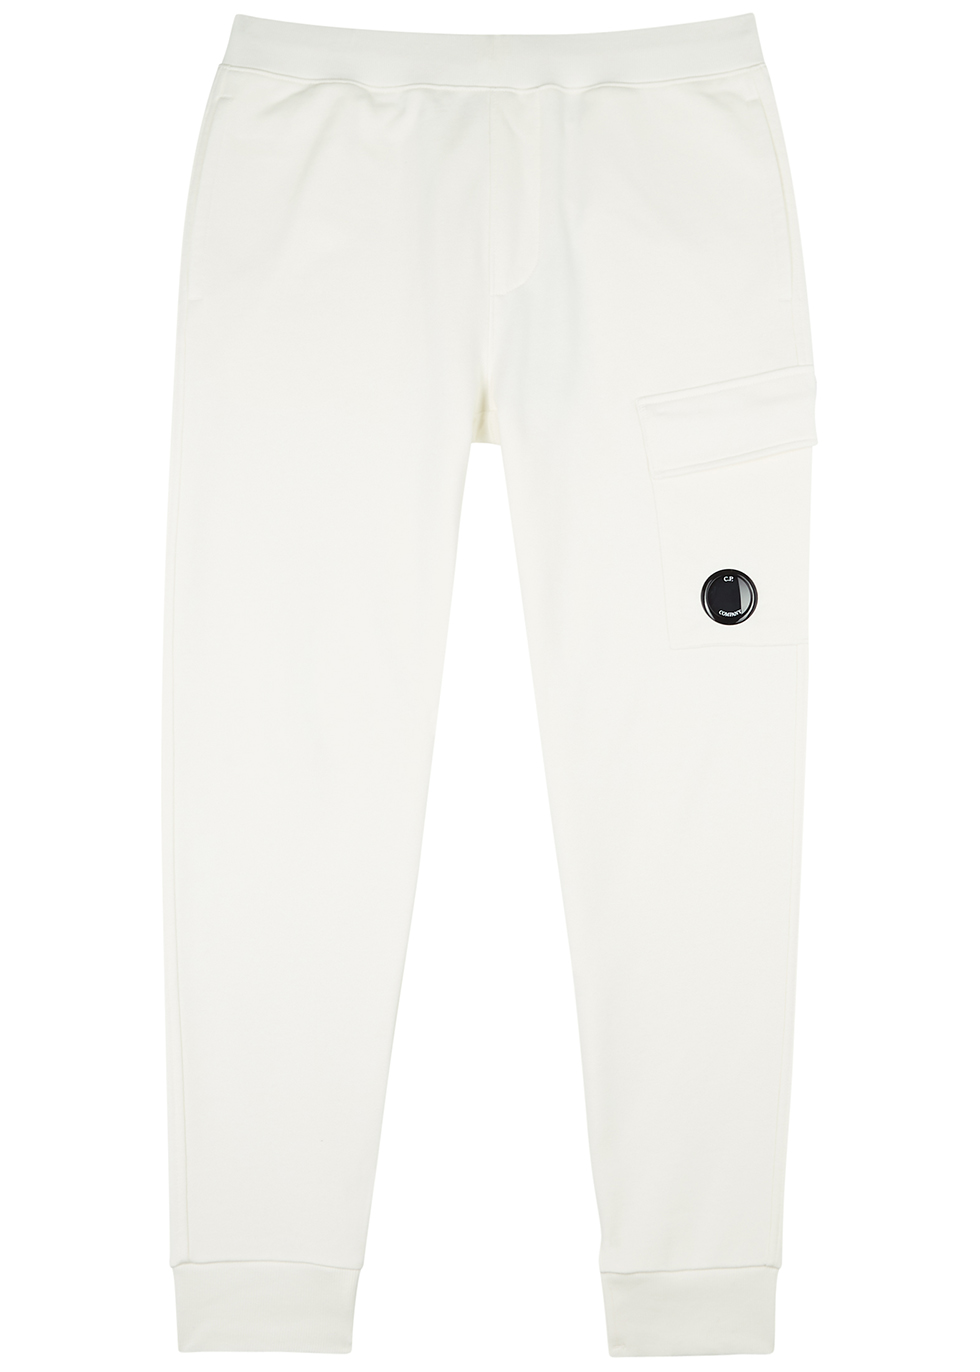 Harvey Nichols Clothing Pants Sweatpants KIDS White cotton sweatpants 